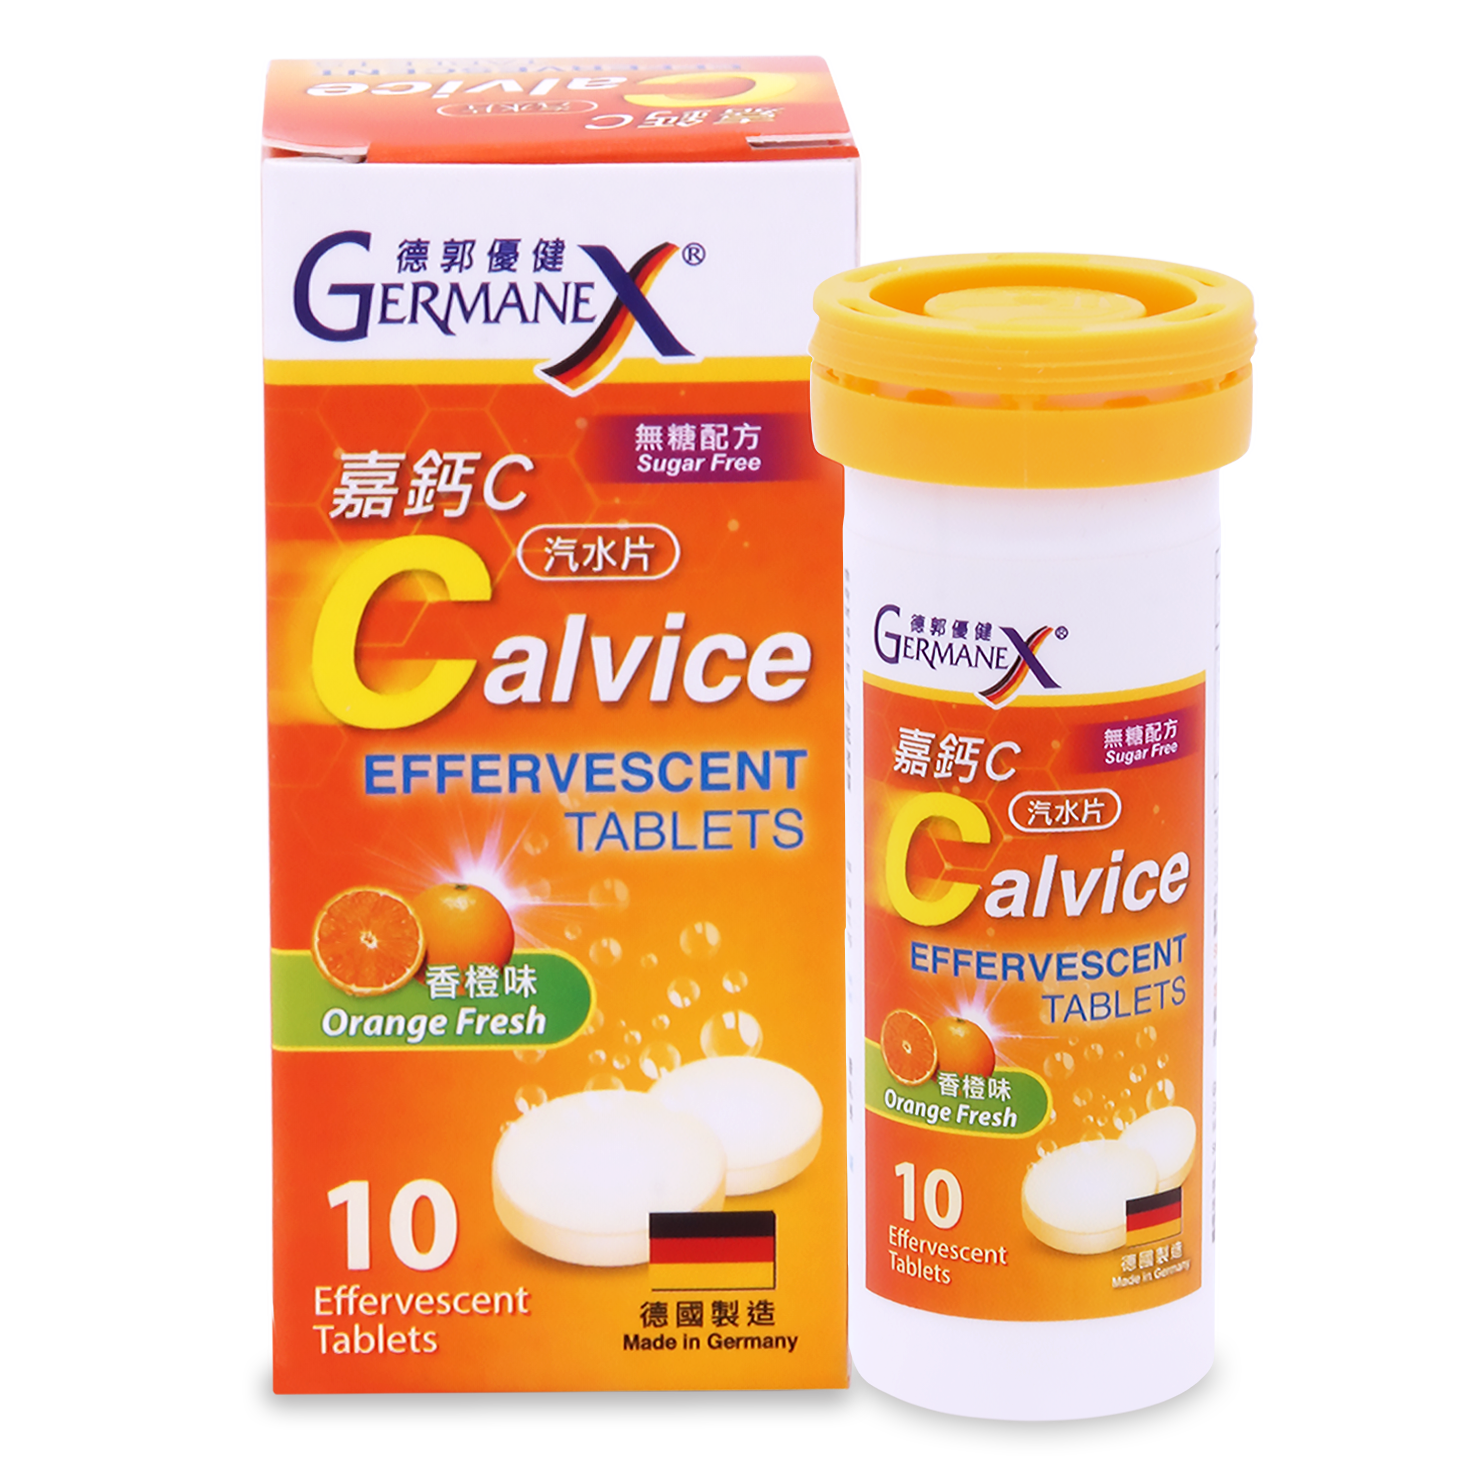 (香橙味) 德郭優健嘉鈣C汽水片 10's (Orange Fresh)  Germanex Calvice Effervescent Tablets 10's